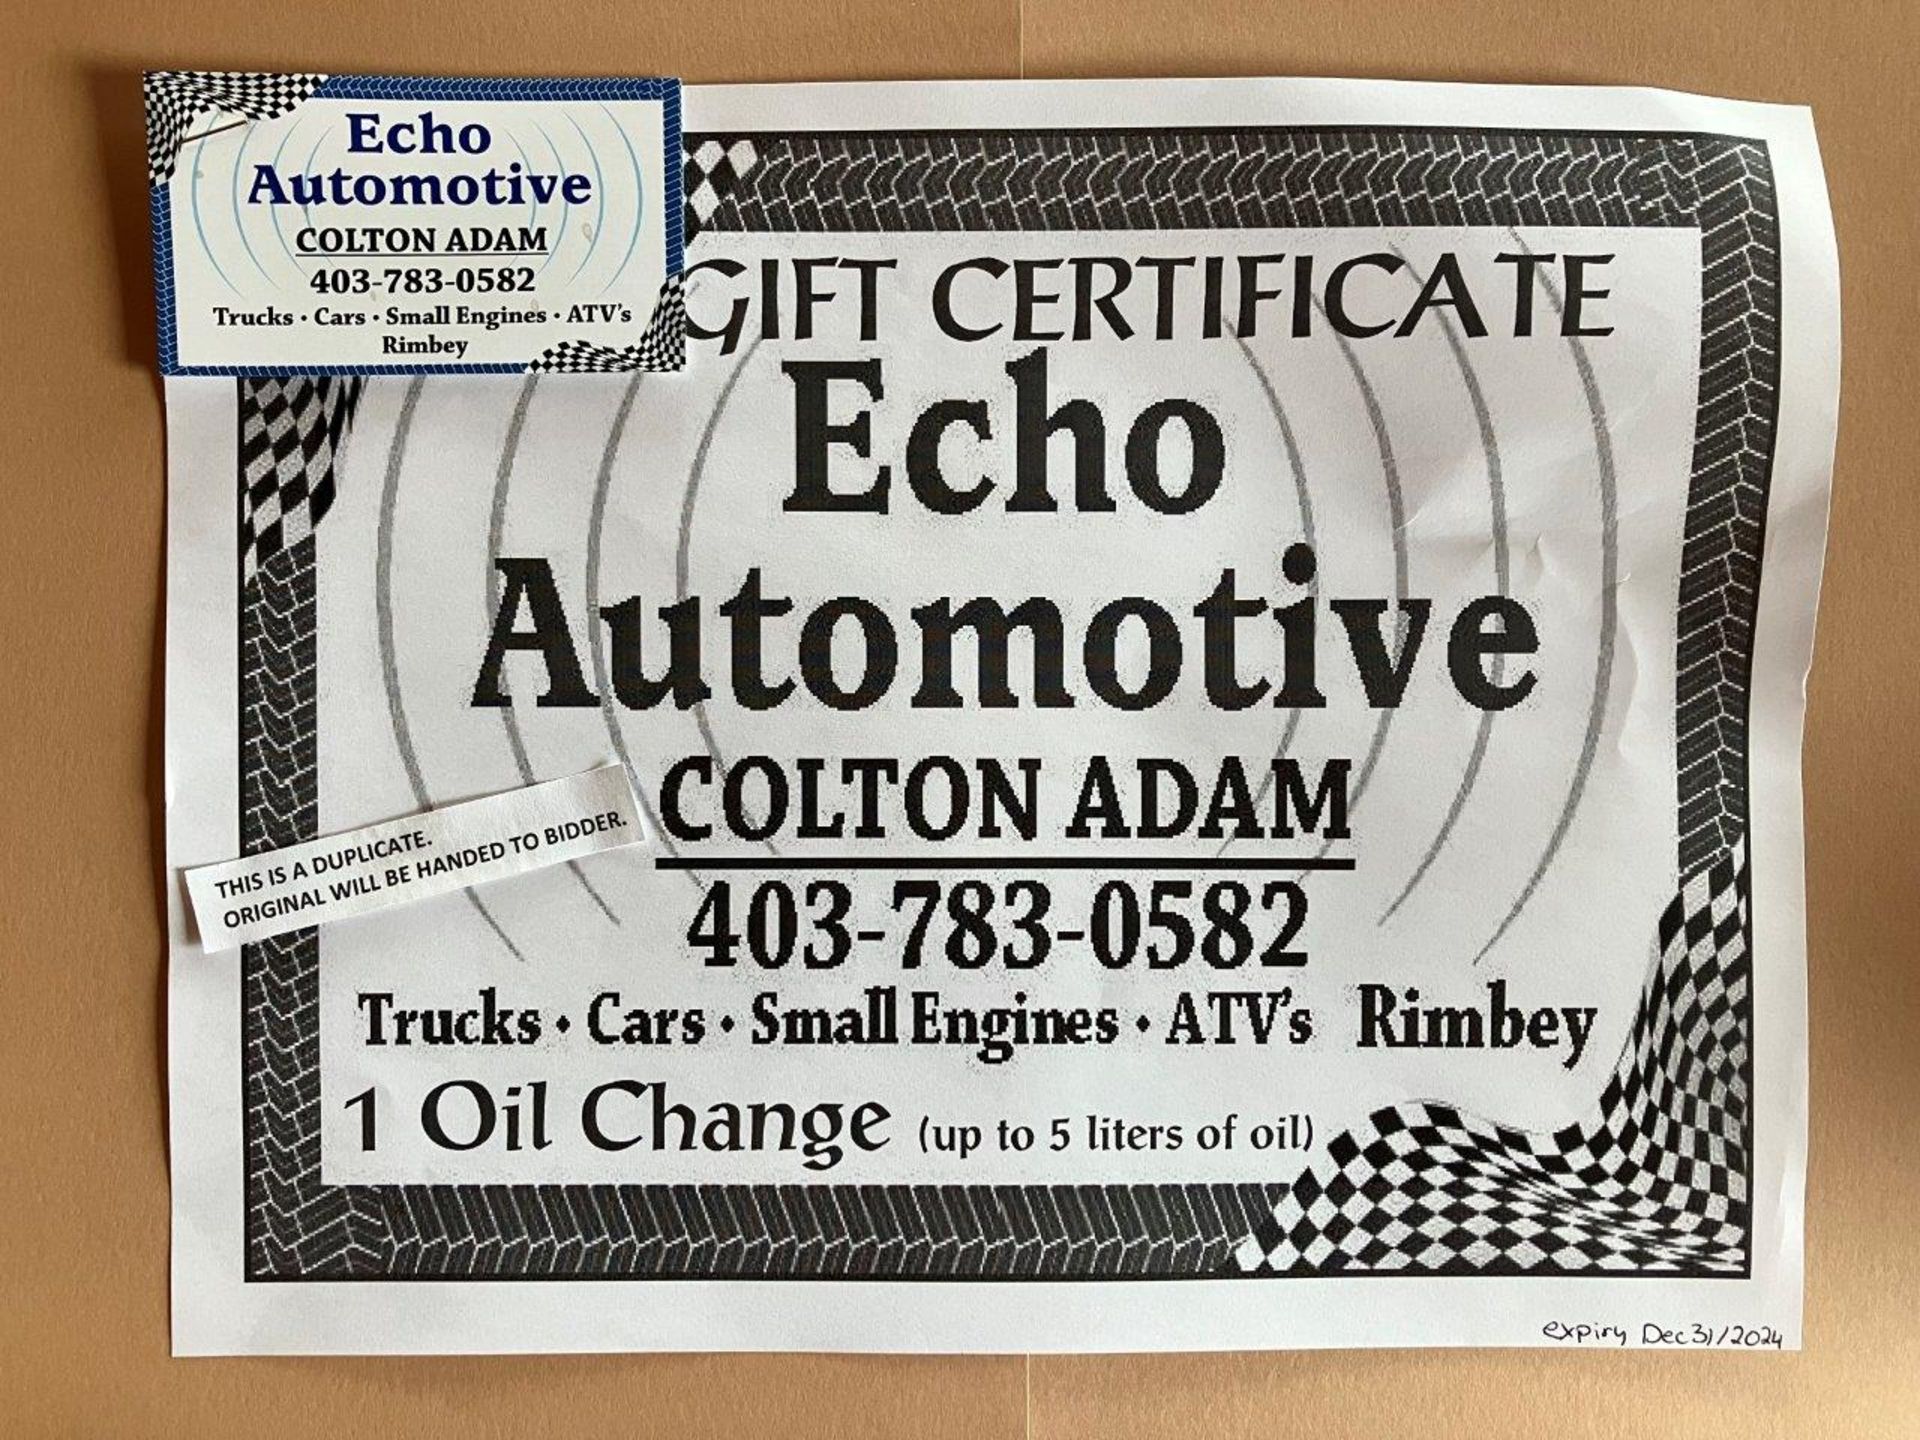 ECHO AUTOMOTIVE OIL CHANGE GIFT CERTIFICATE